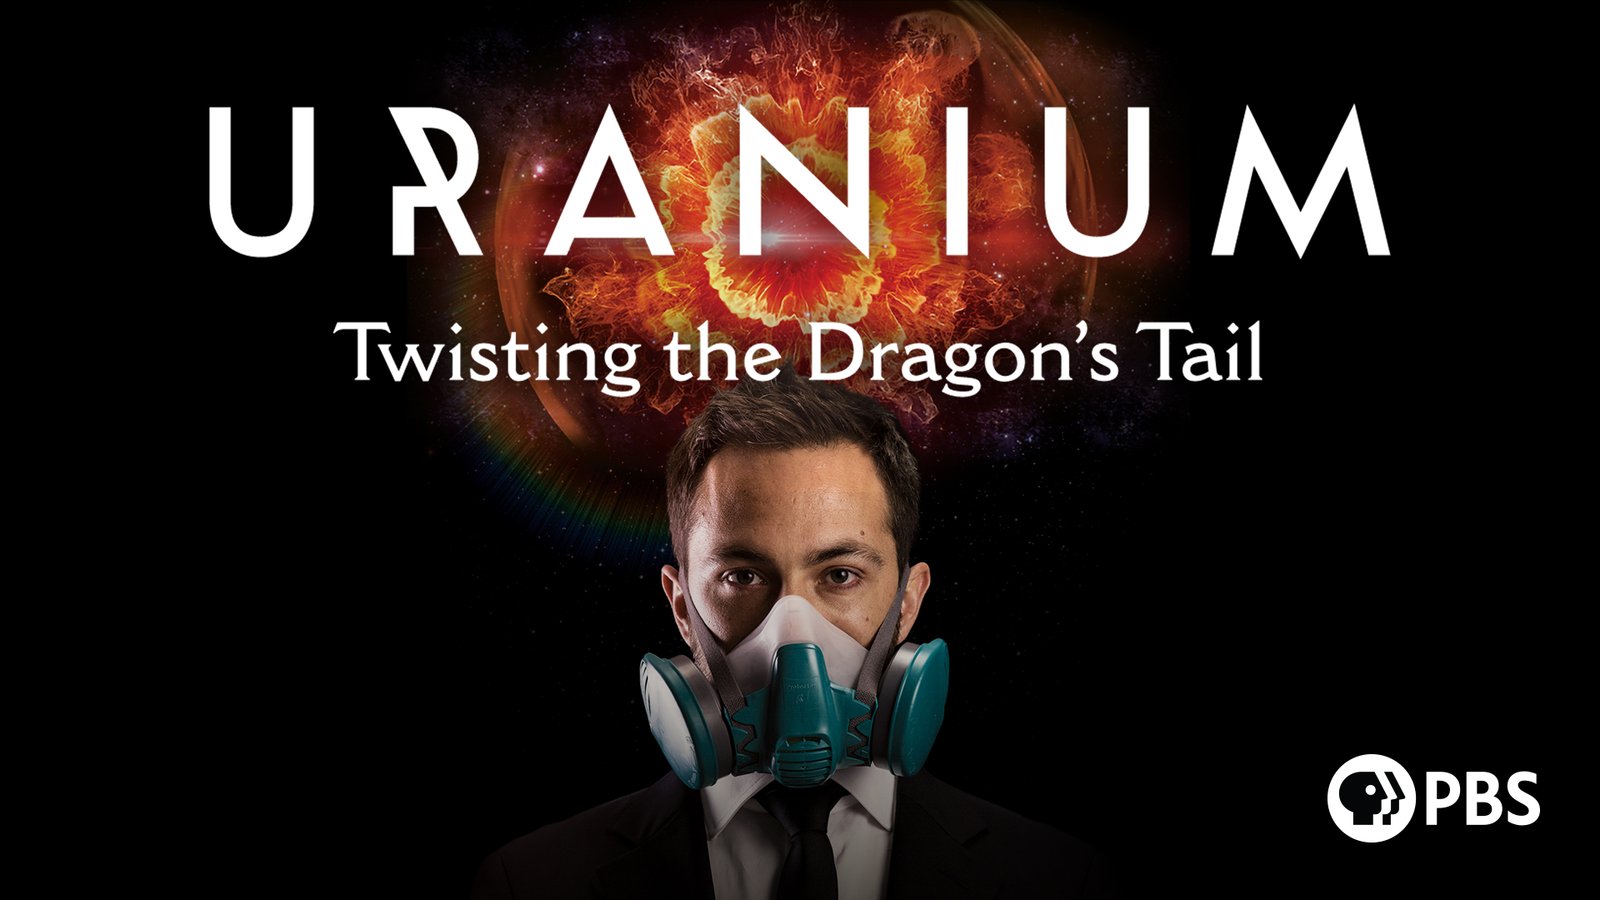 Uranium - Twisting the Dragon’s Tail - The Untold Story of Uranium